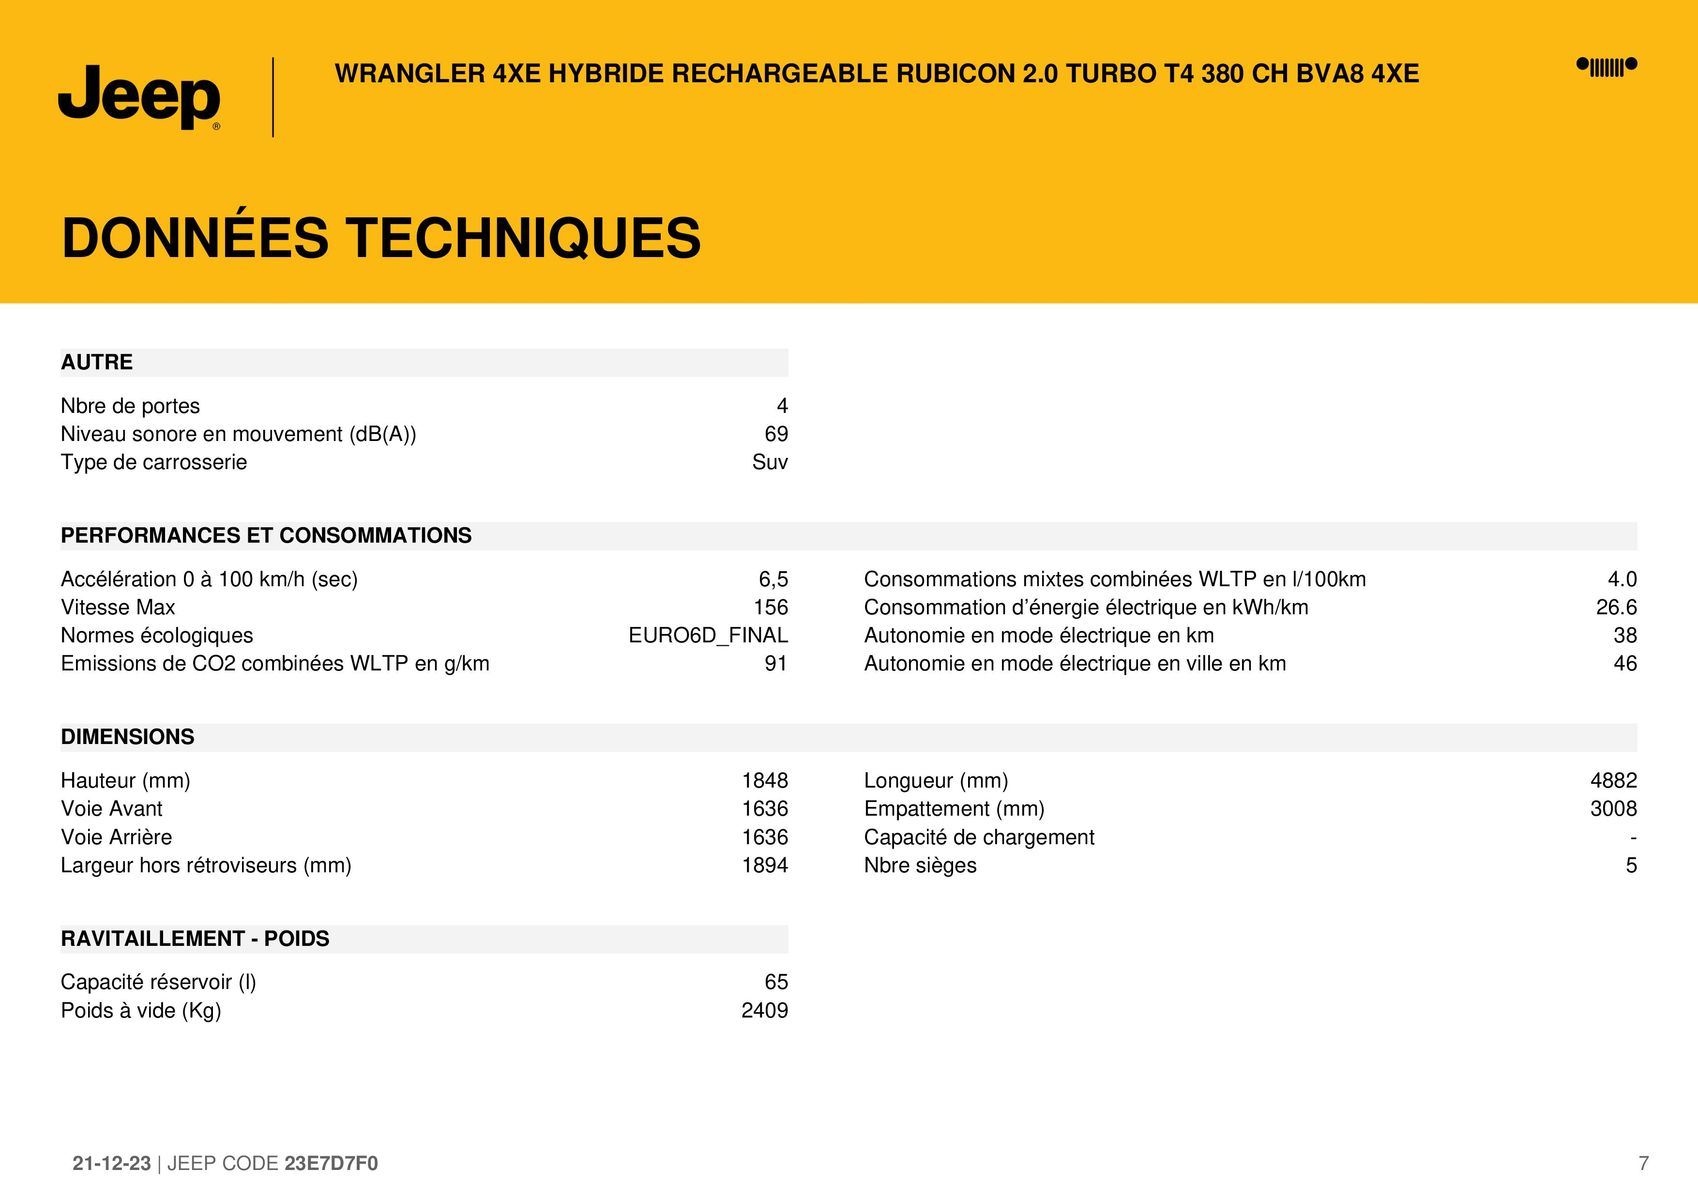 Catalogue WRANGLER 4XE HYBRIDE RECHARGEABLE RUBICON 2.0 TURBO T4 380 CH BVA8 4XE, page 00007